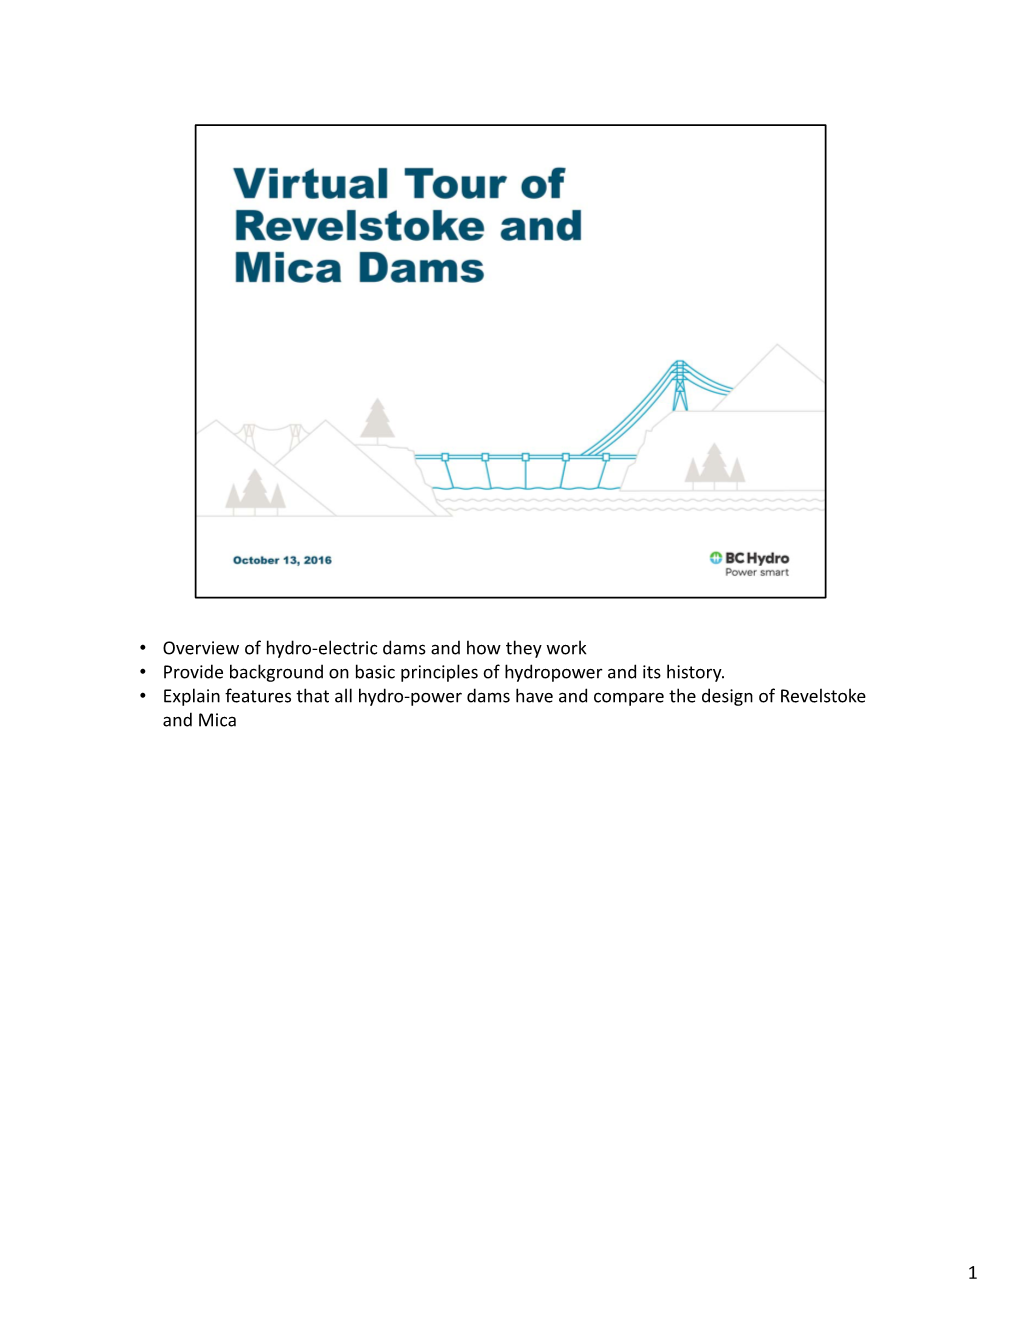 Virtual Tour of Revelstoke and Mica Dams